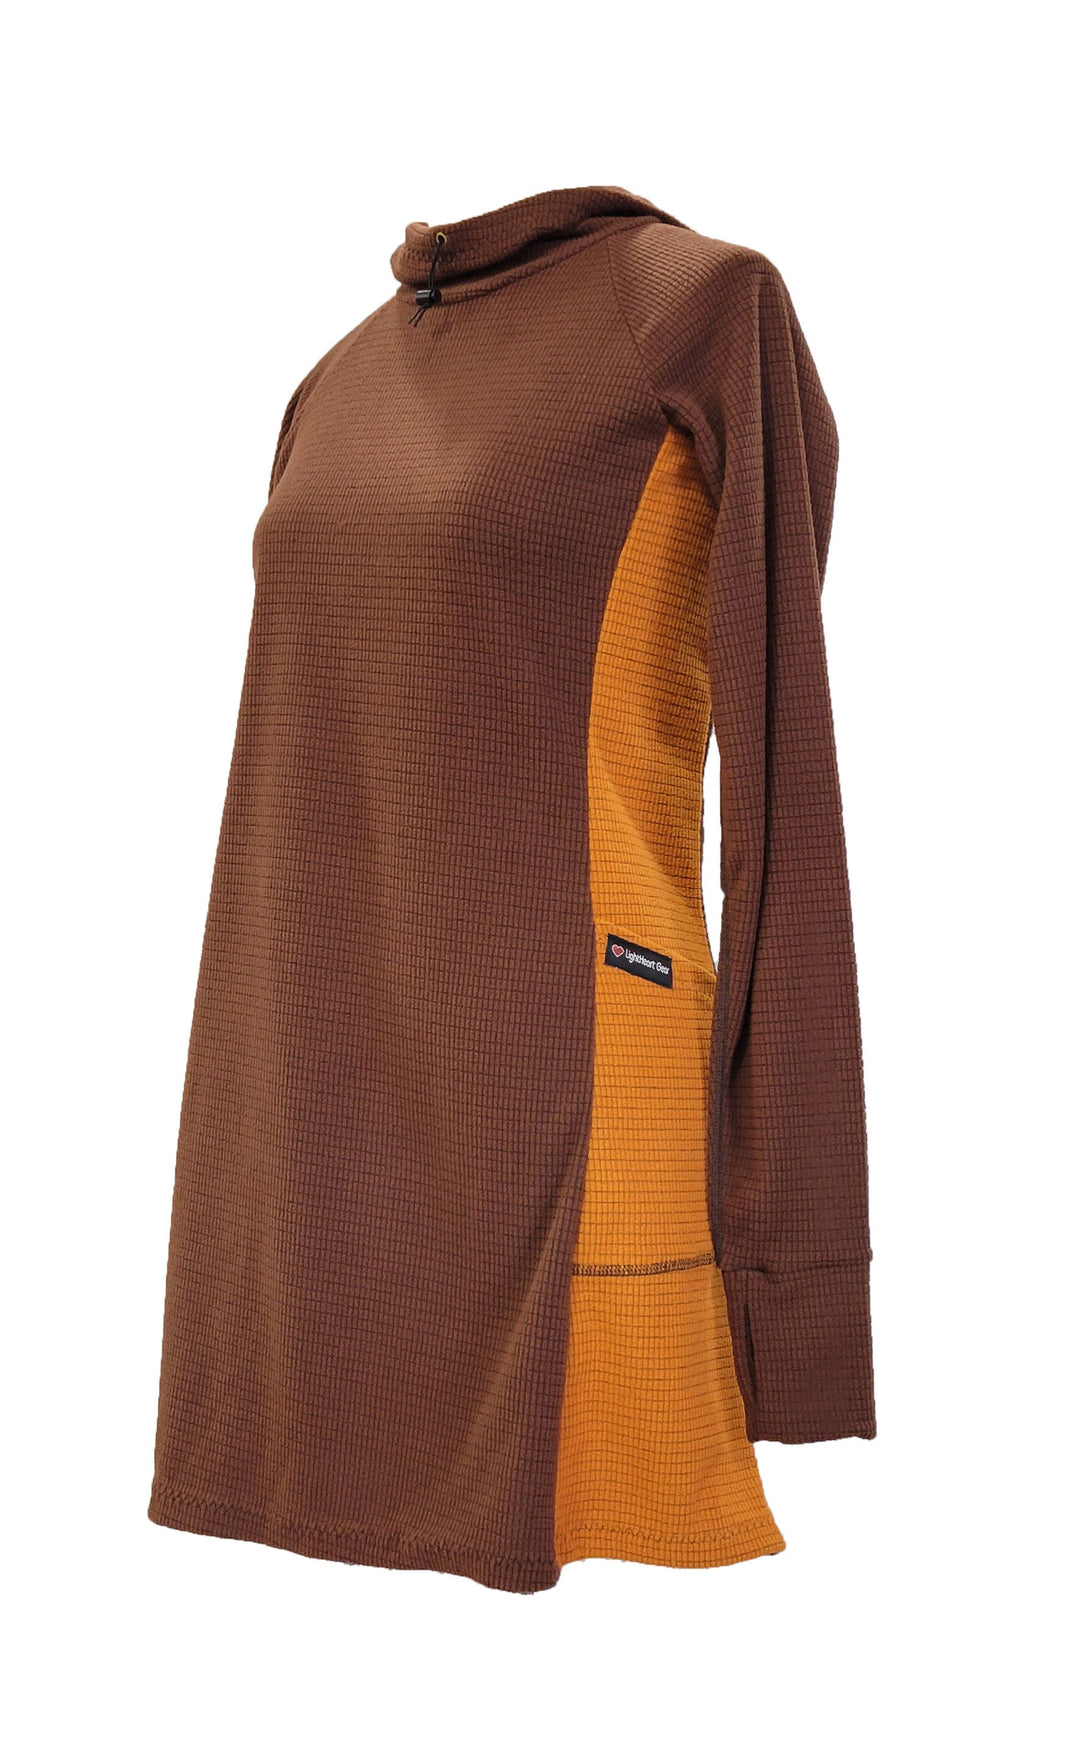 Fleece dress - Brown & Orange sides